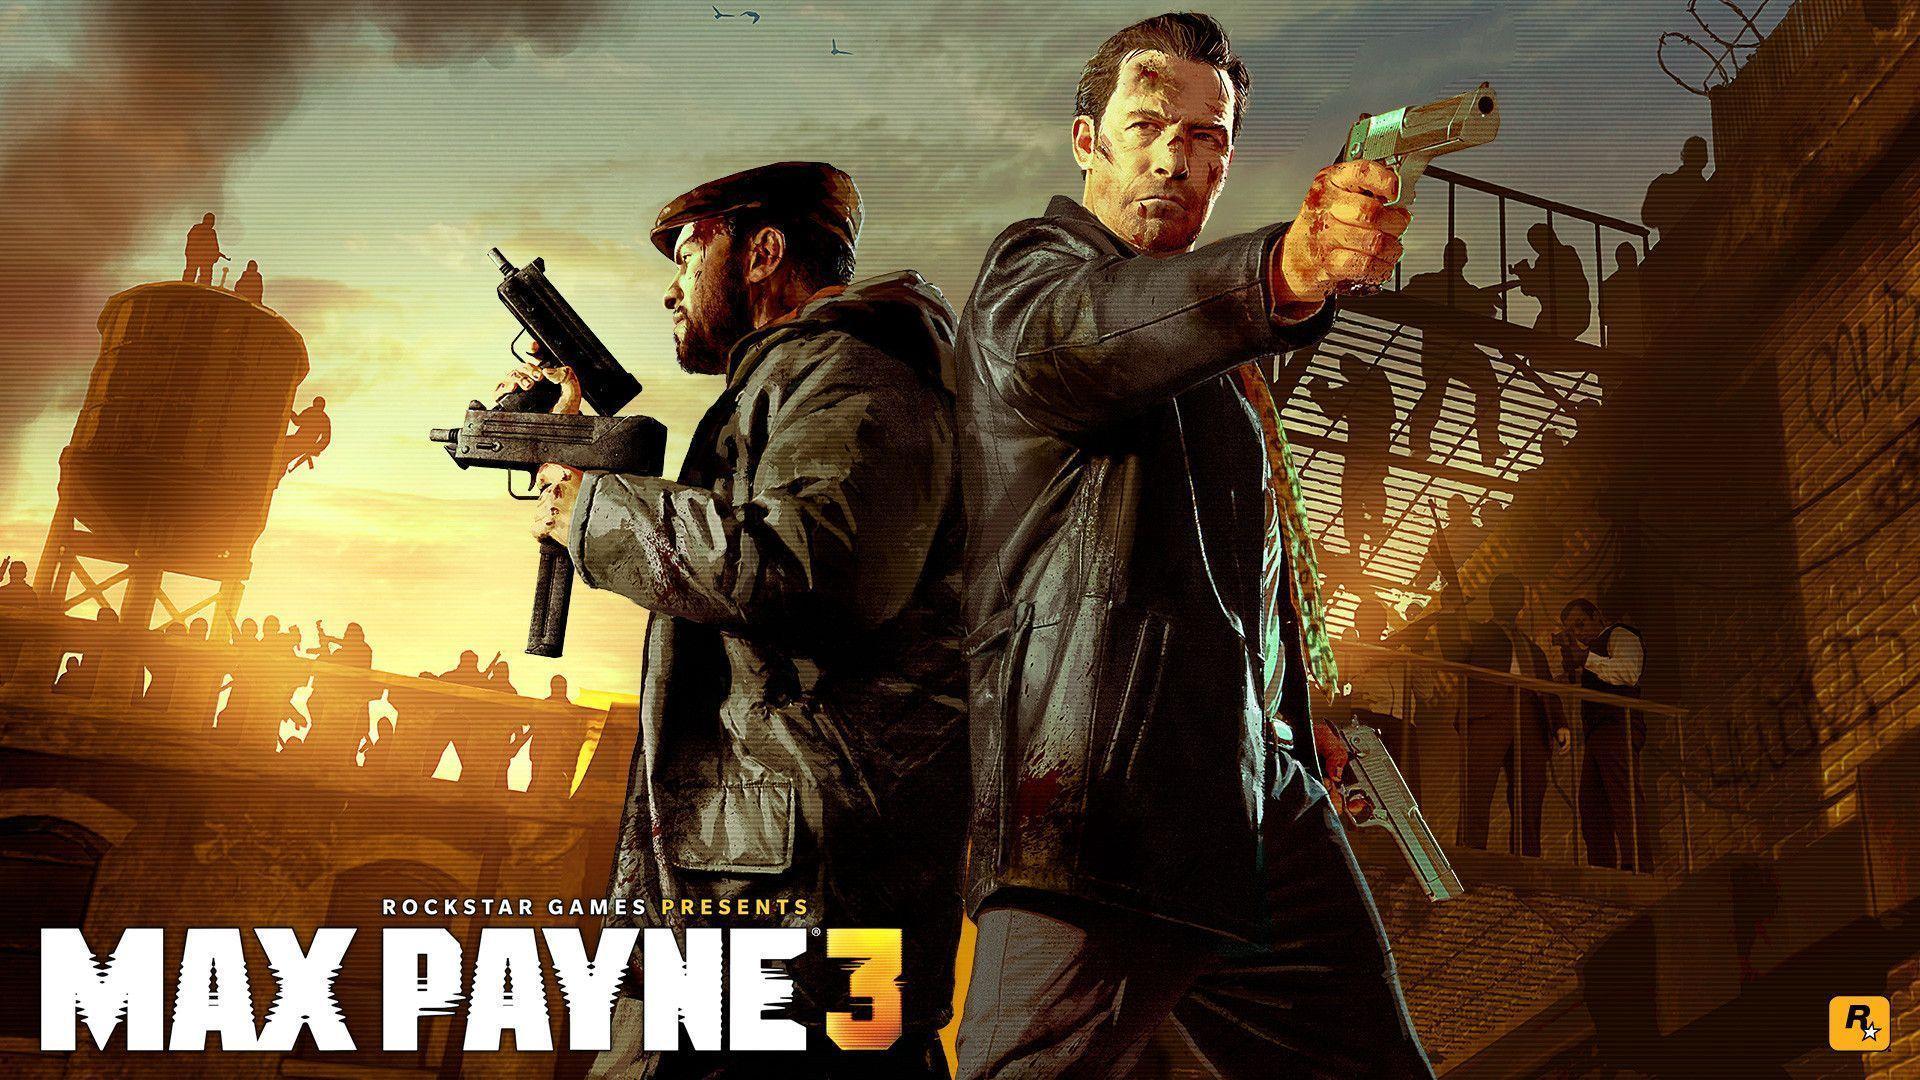 Downloads. Rockstar Games Presents Max Payne 3